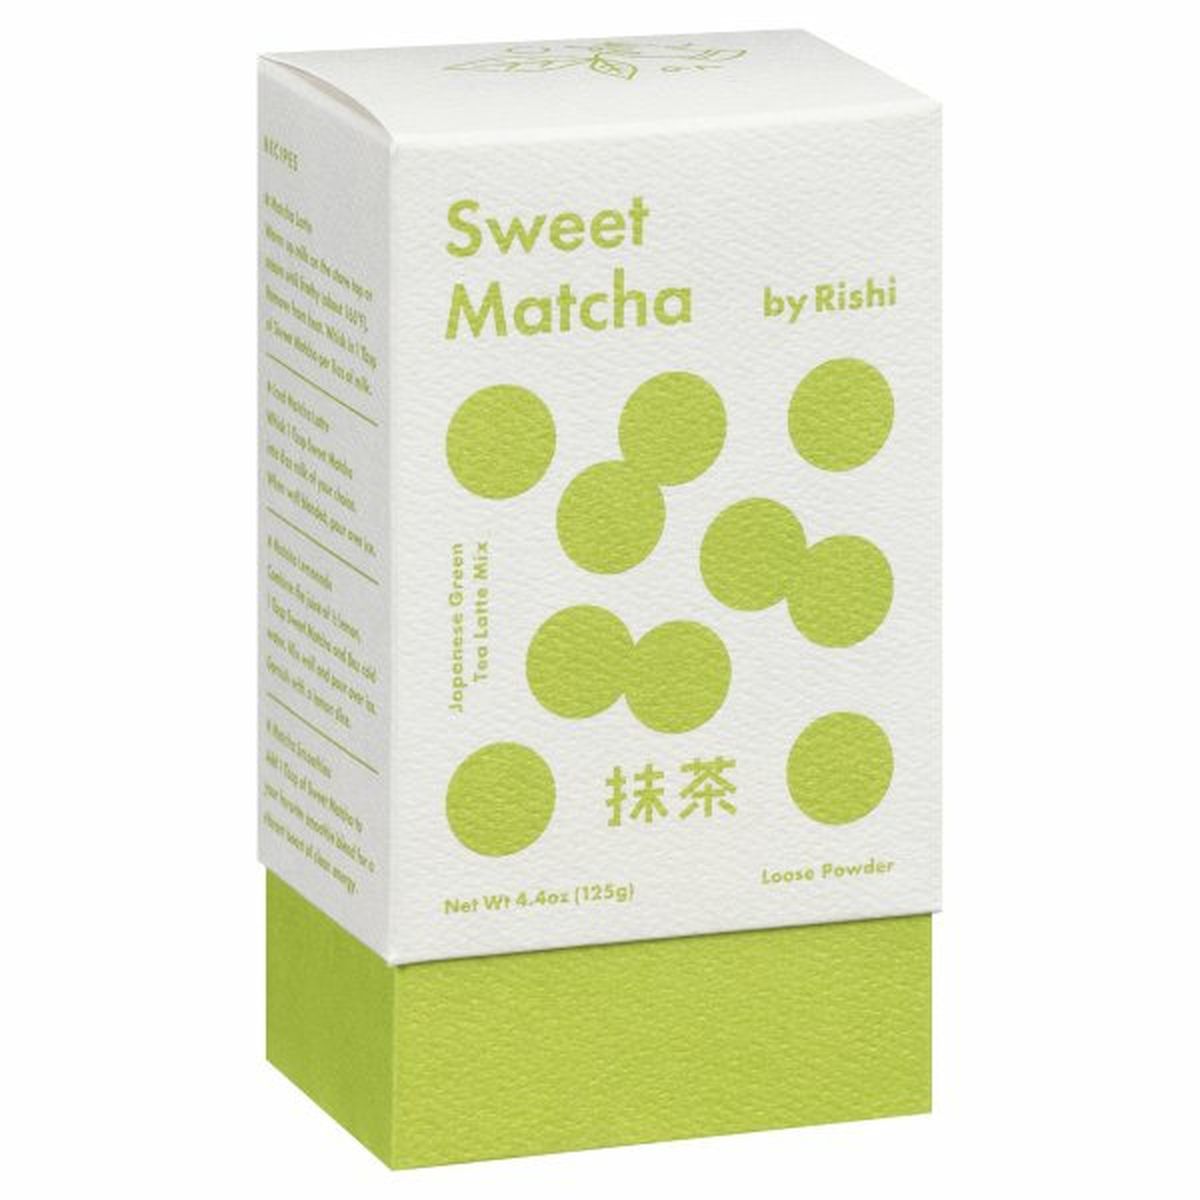 Calories in Rishi Tea Japanese Green Tea Latte Mix, Sweet Matcha, Loose Powder